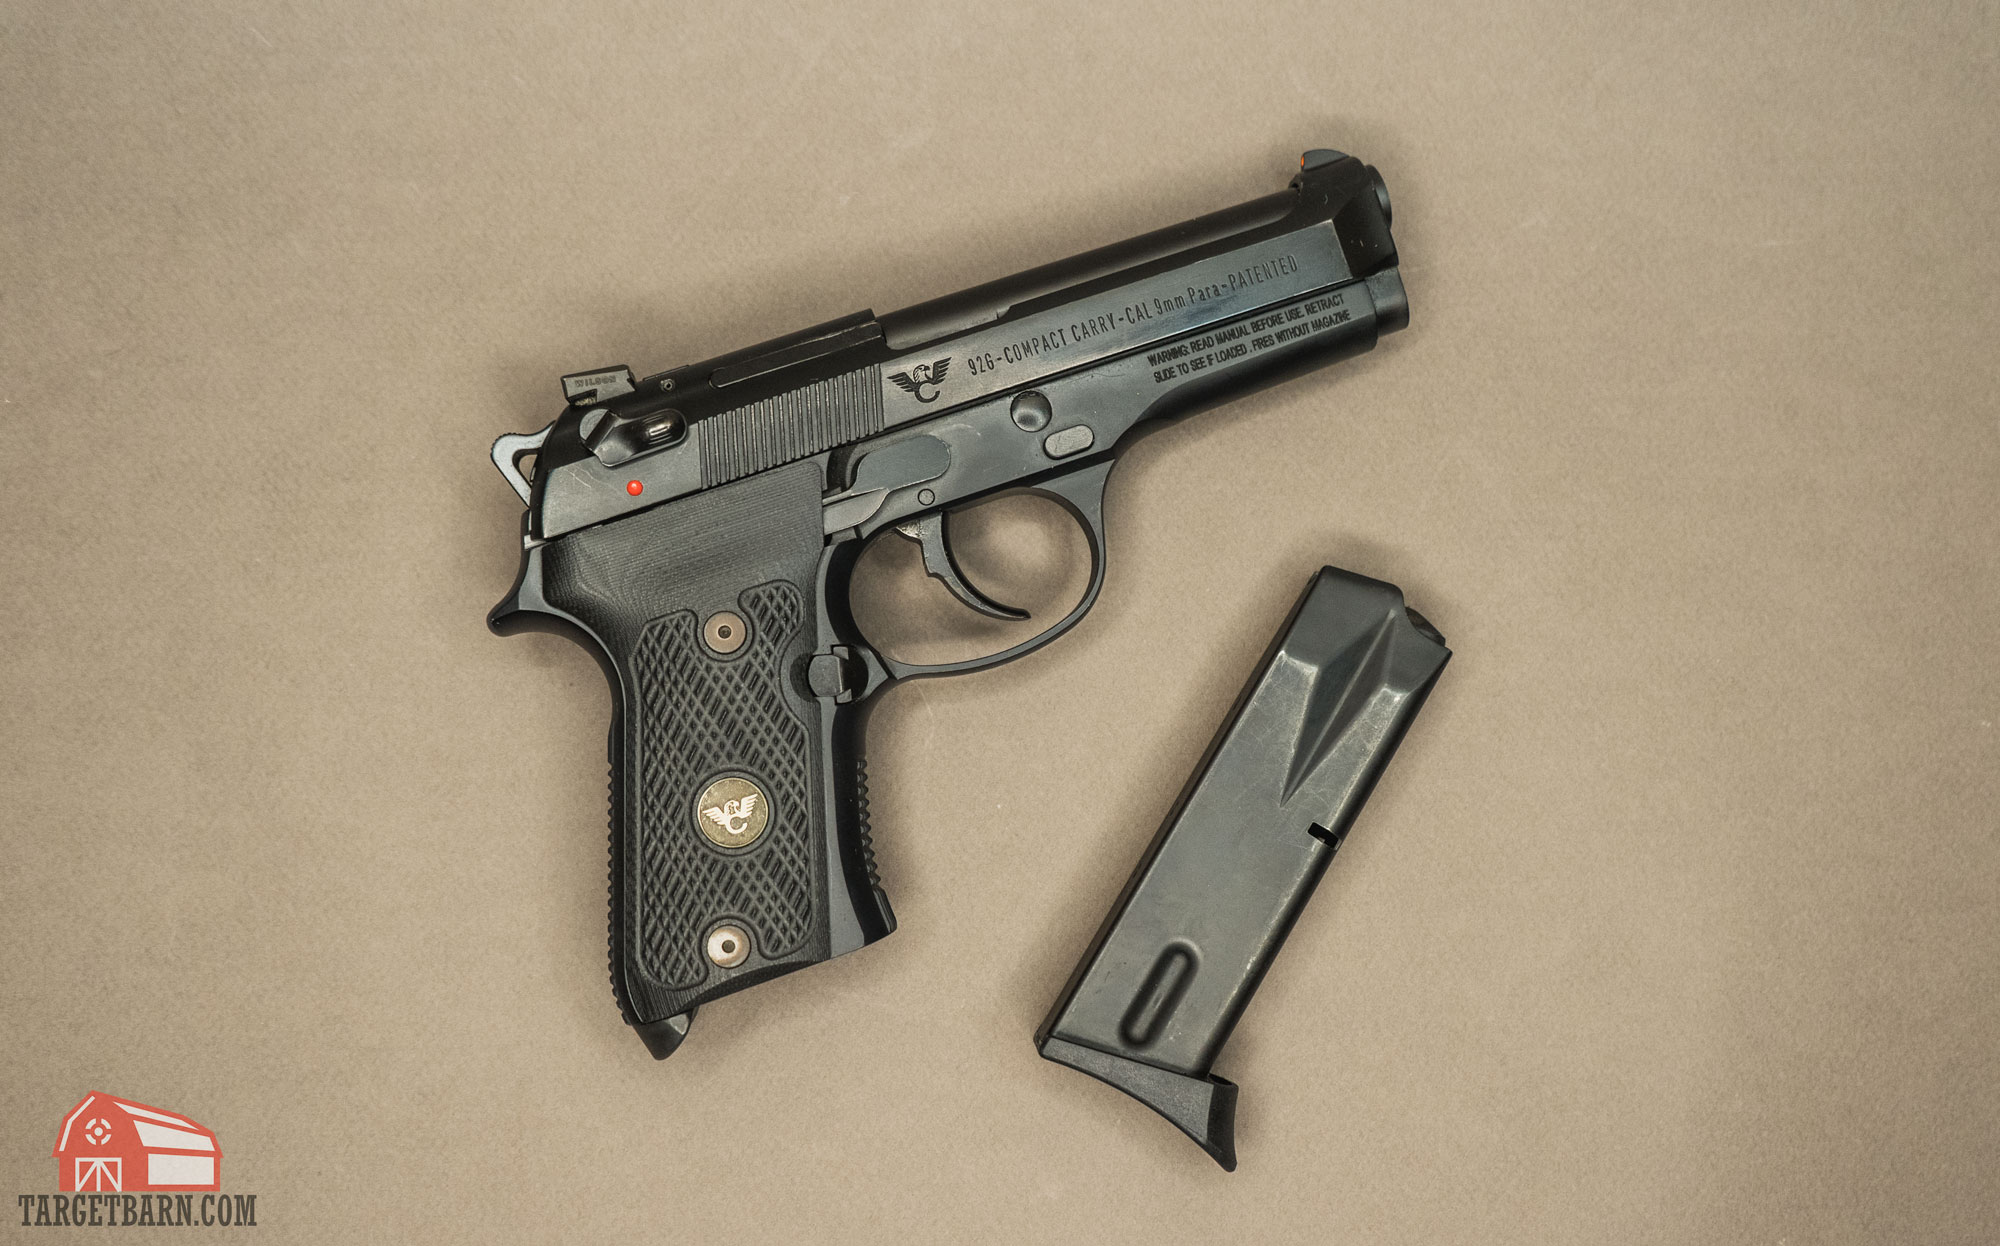 a pistol with detachable magazine